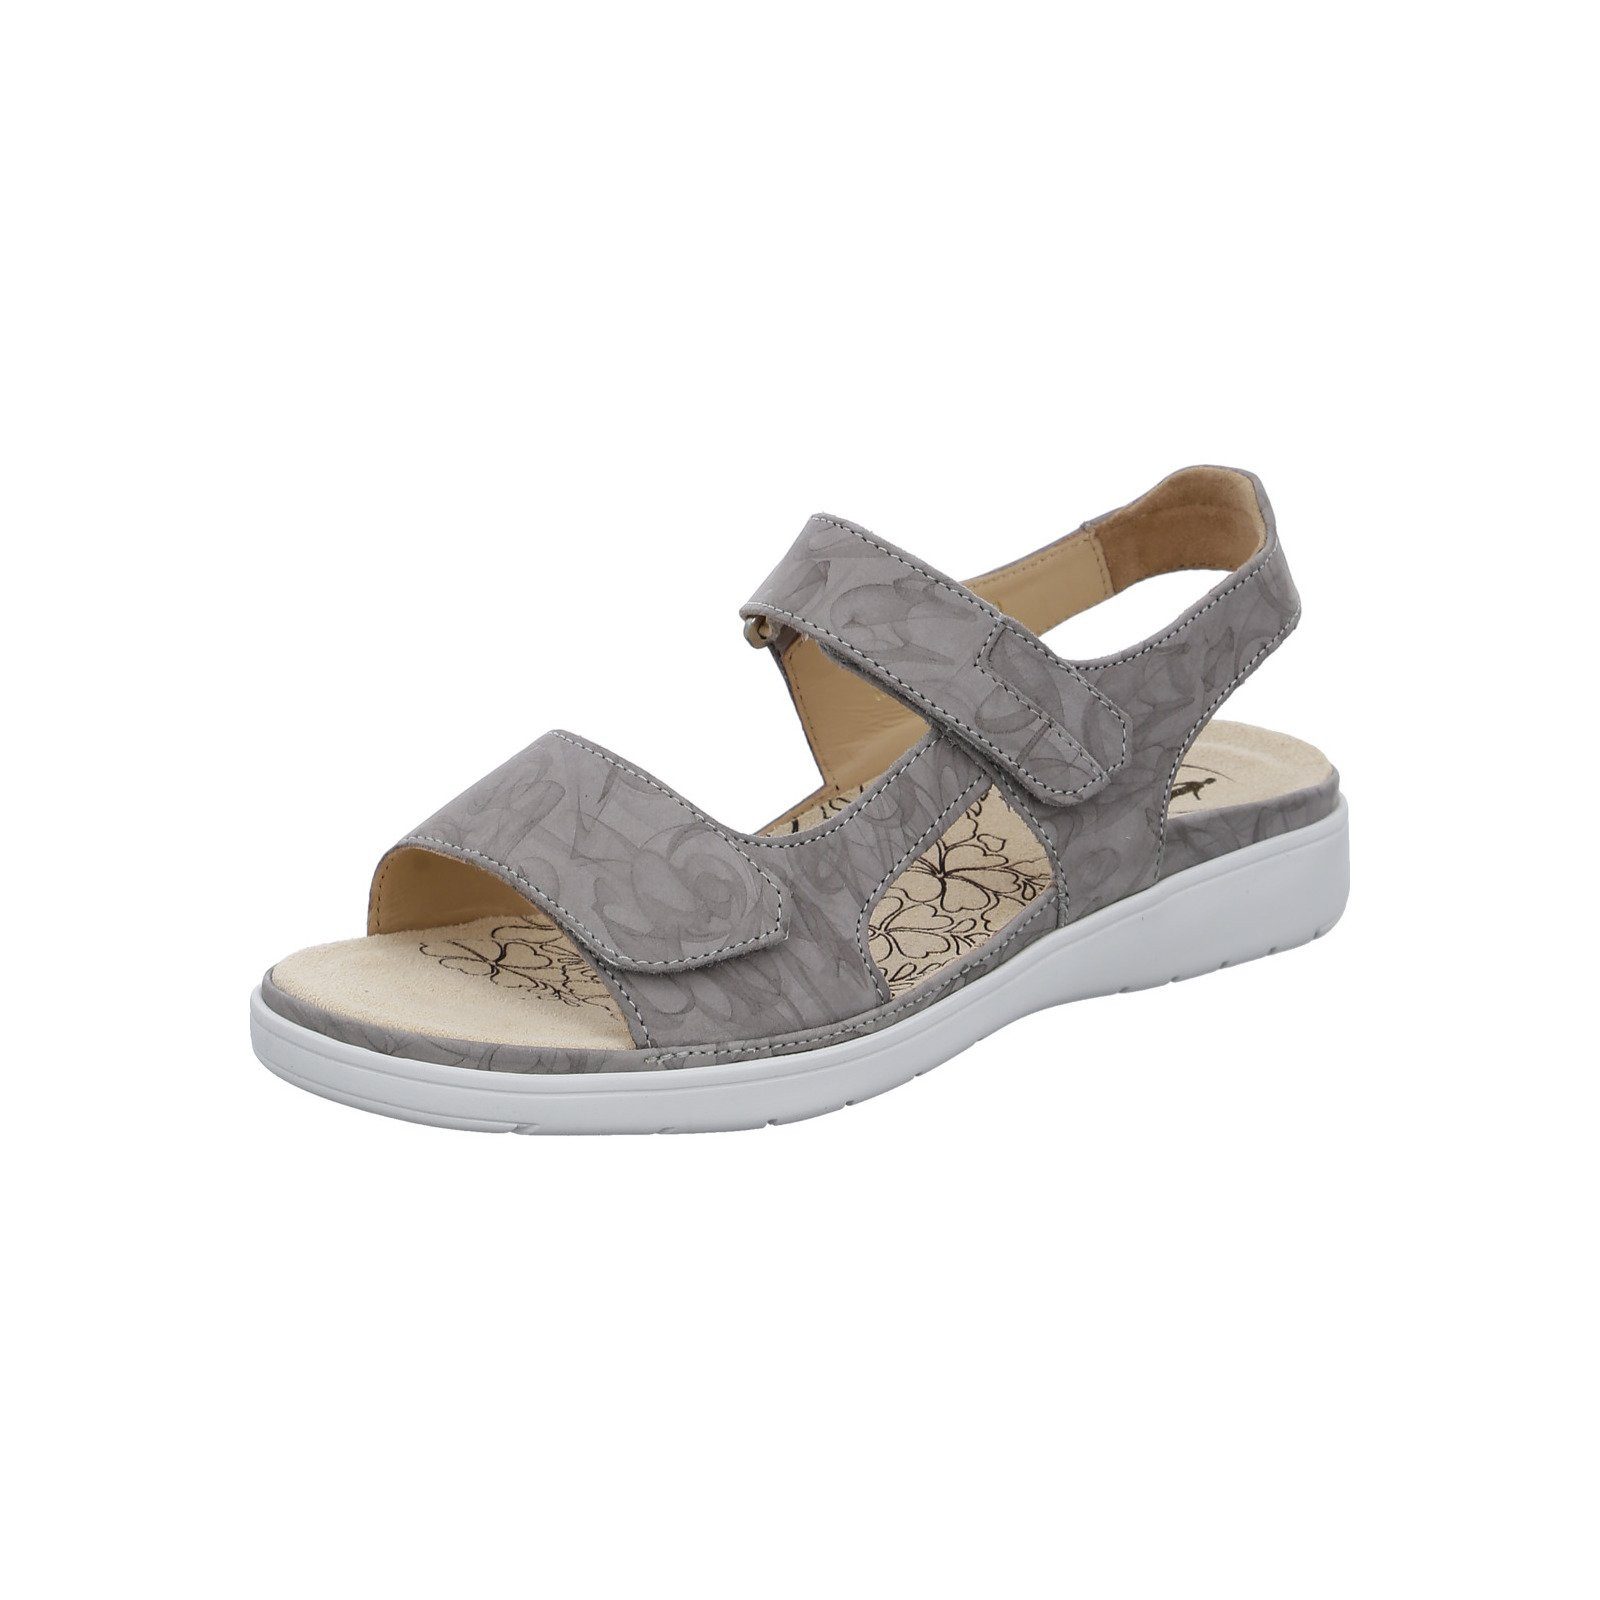 Ganter Gina - Damen Schuhe Sandalette grau